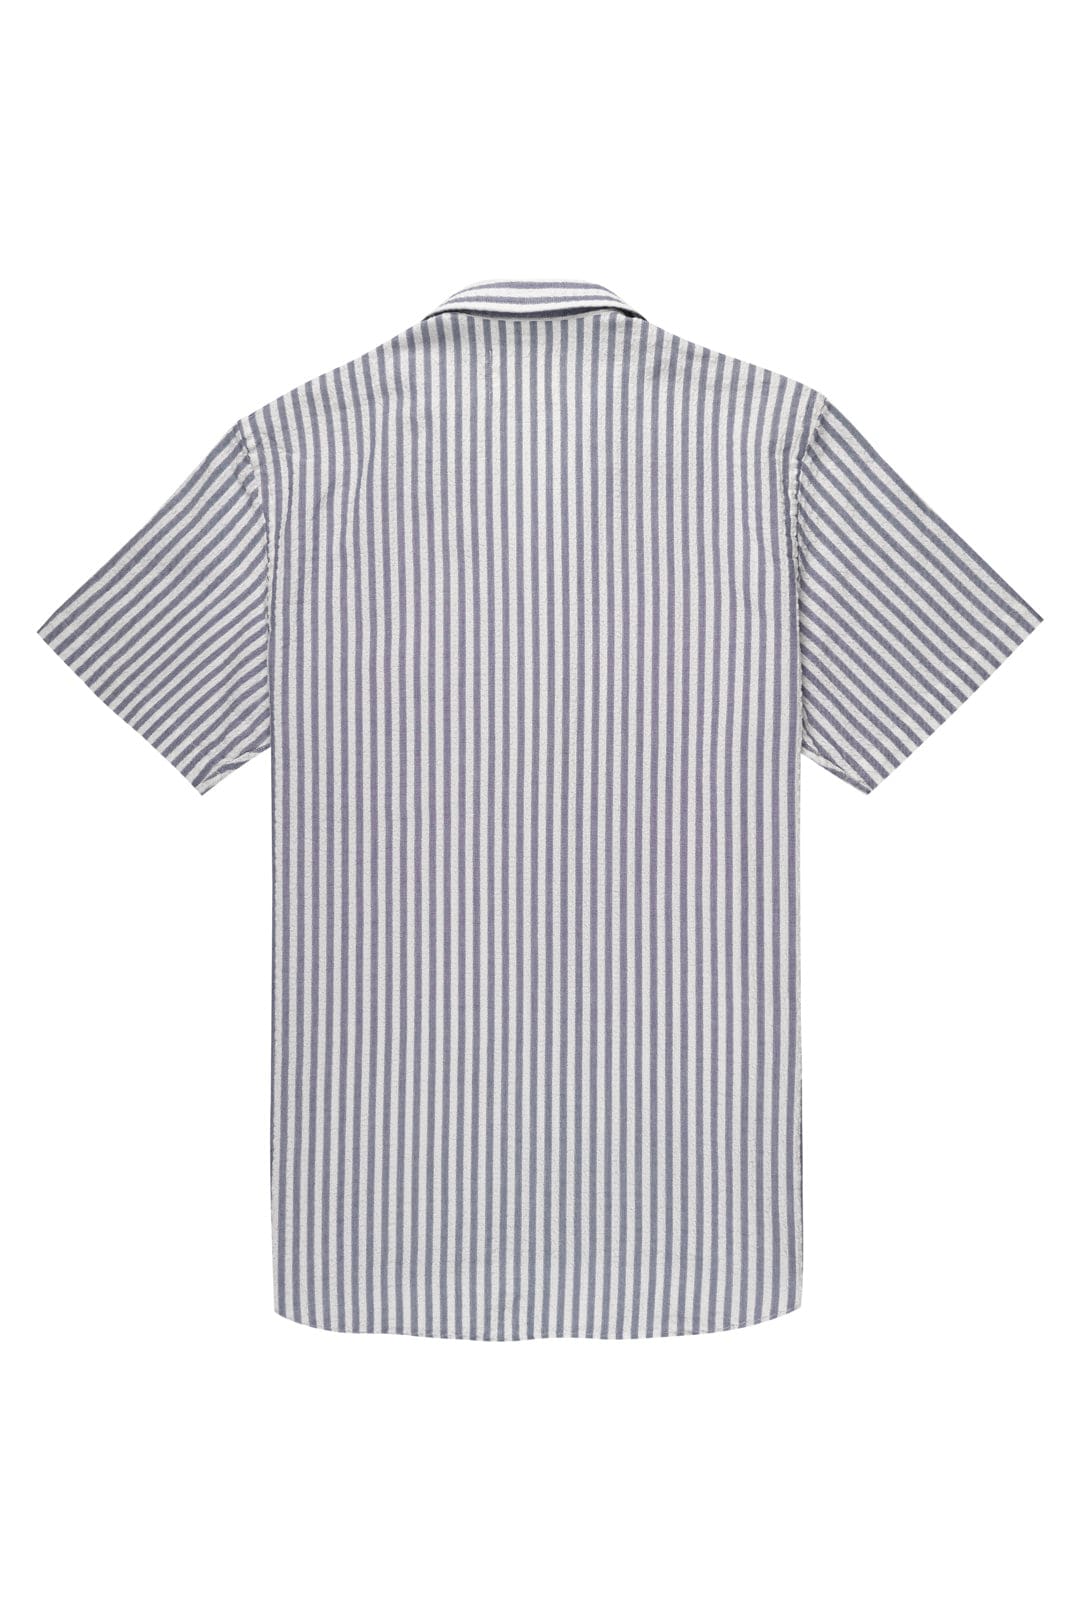 Silveira Shirt - Blue Stripes